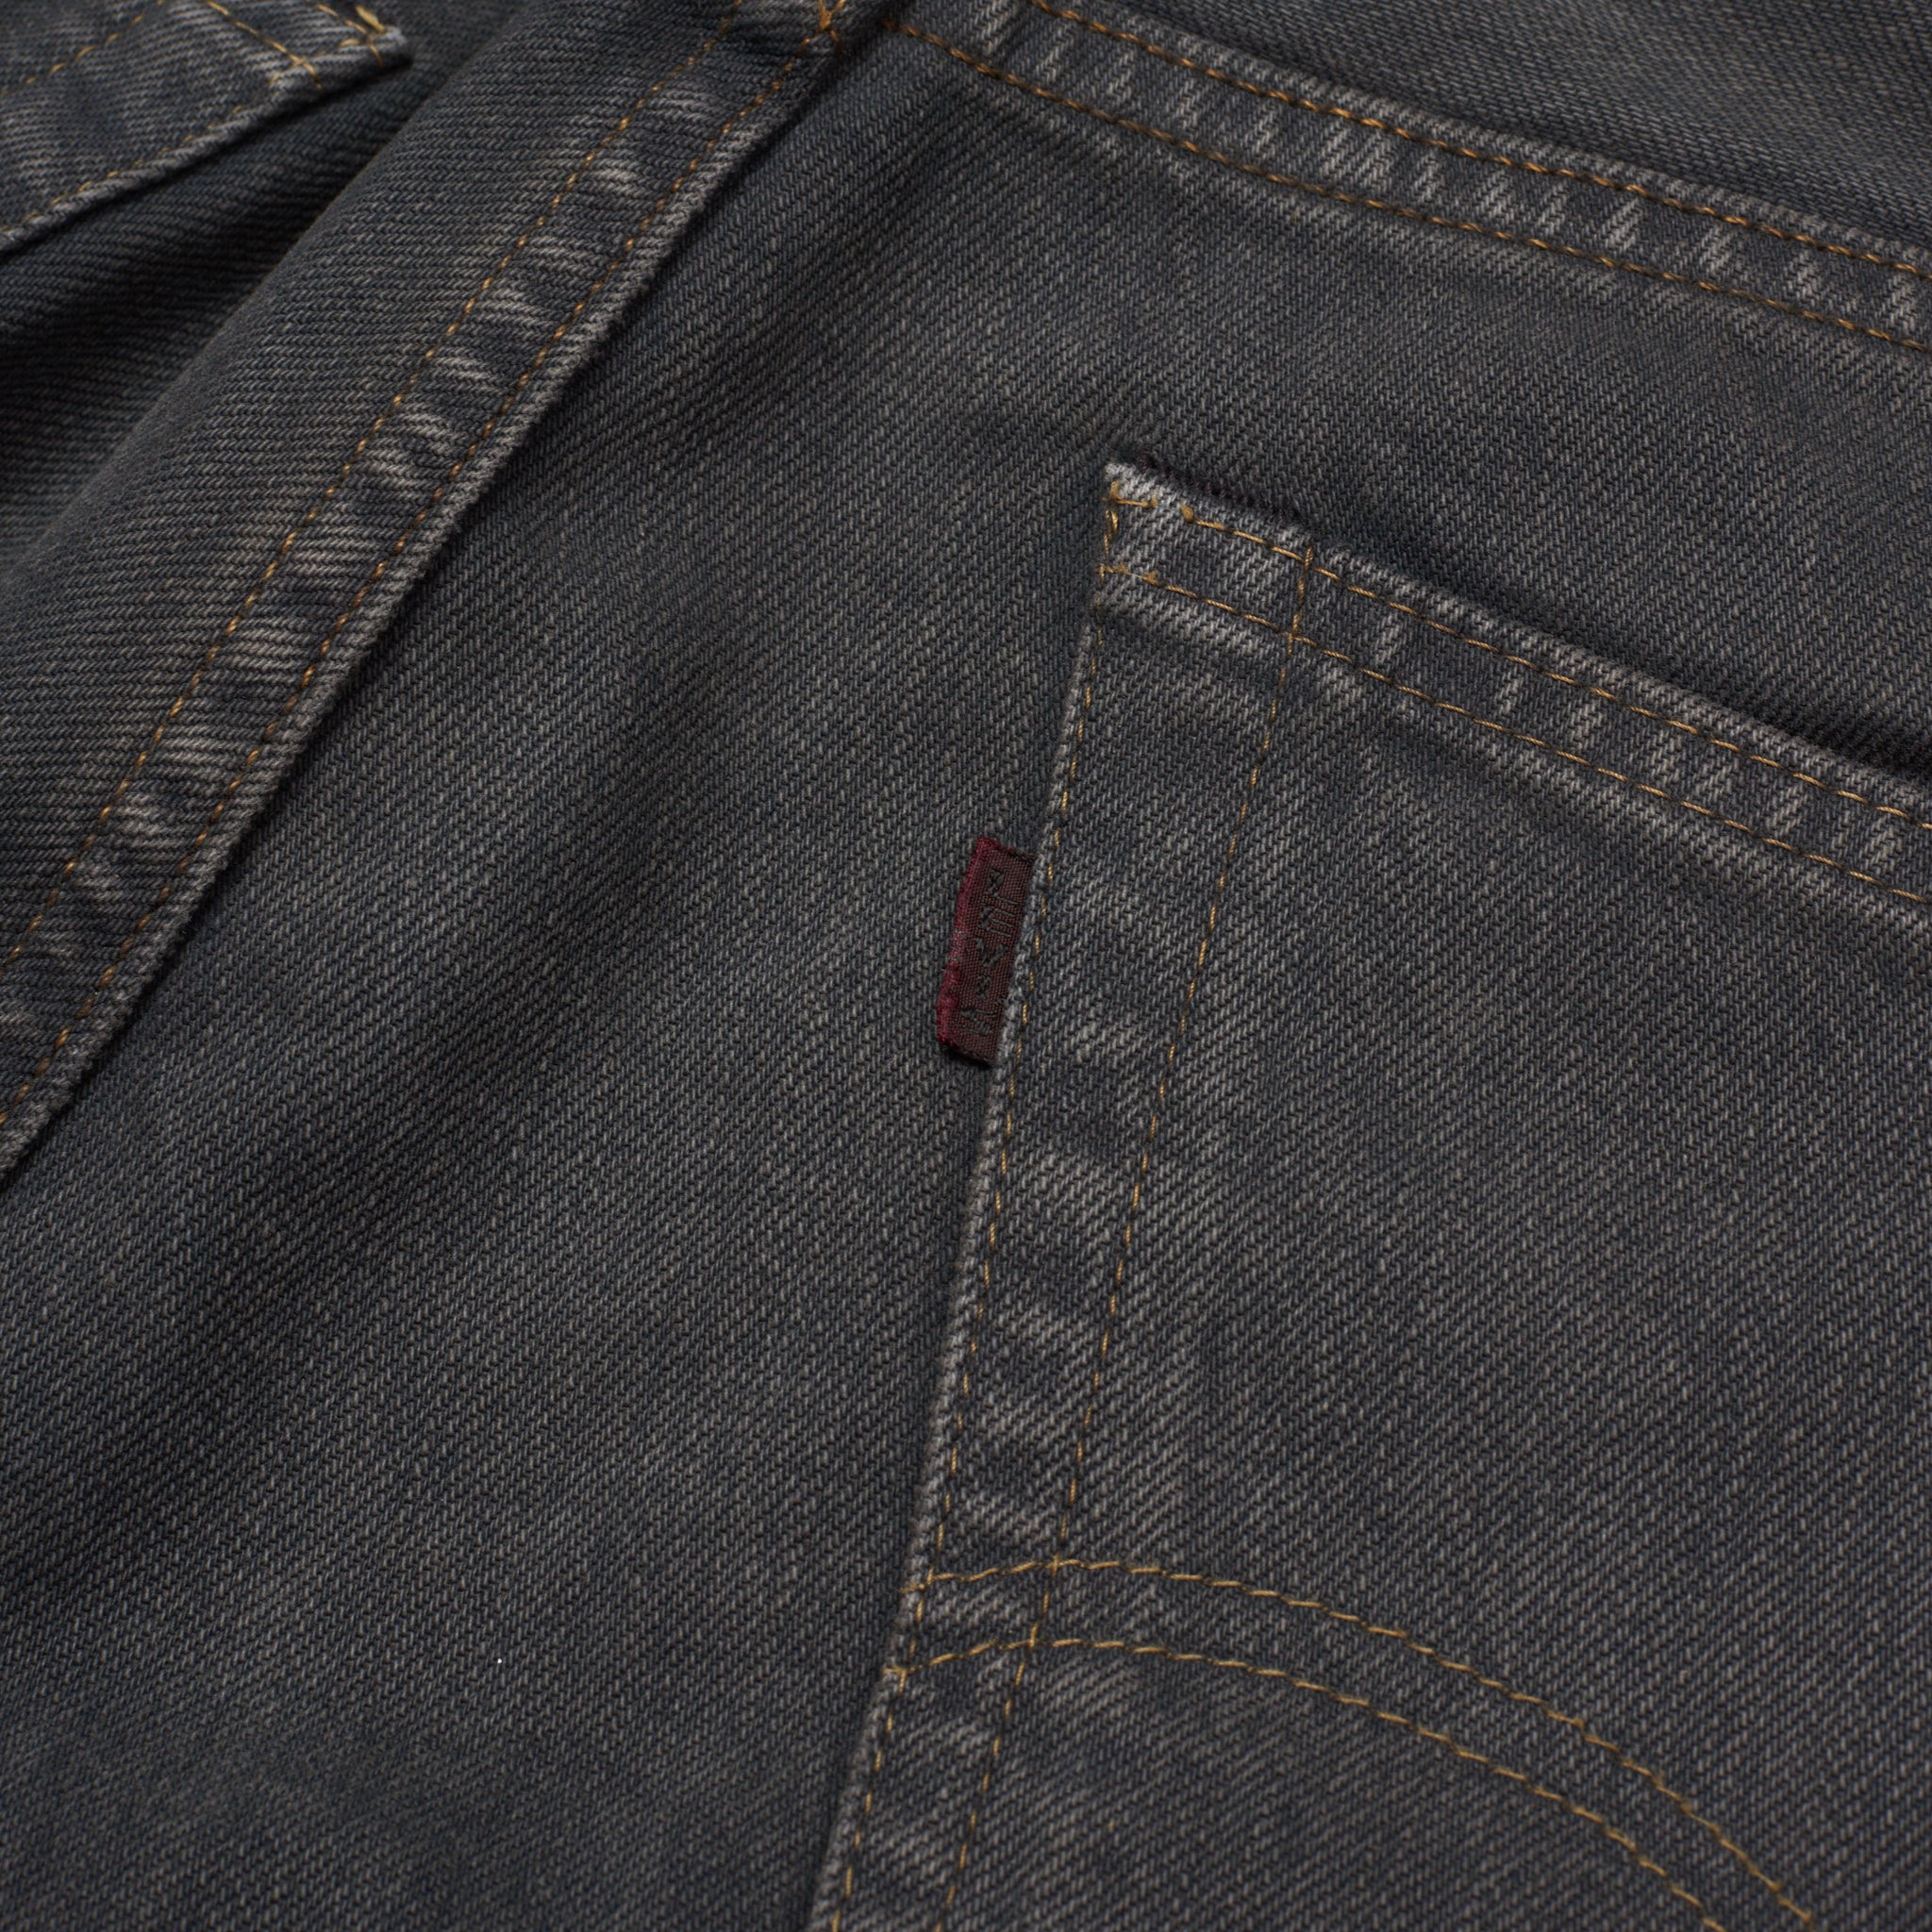 LEVI'S Vintage Clothing 501-0217 Dark Gray Denim Slim Straight Fit Jeans W33 L32 LEVI'S